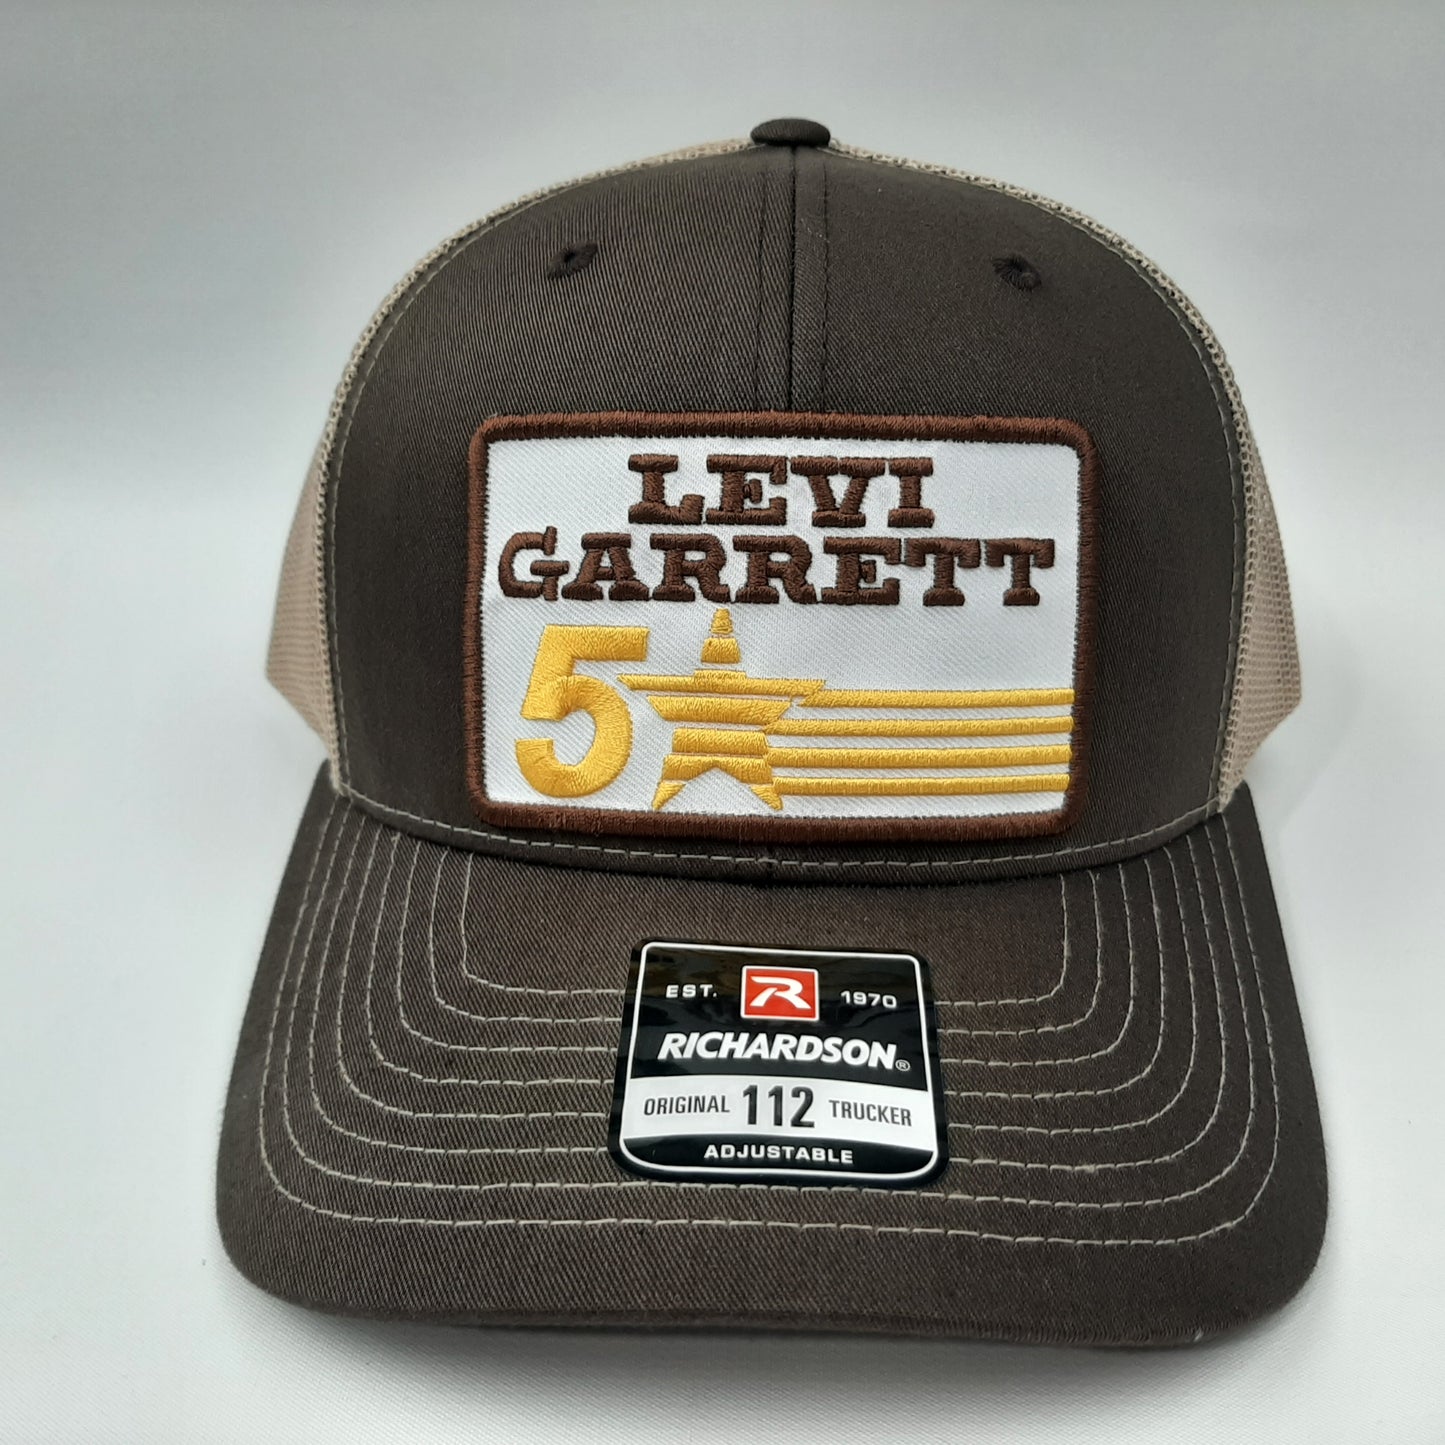 Levi Garrett Patch Richardson 112 Trucker Mesh Snapback Cap Hat Brown & Tan